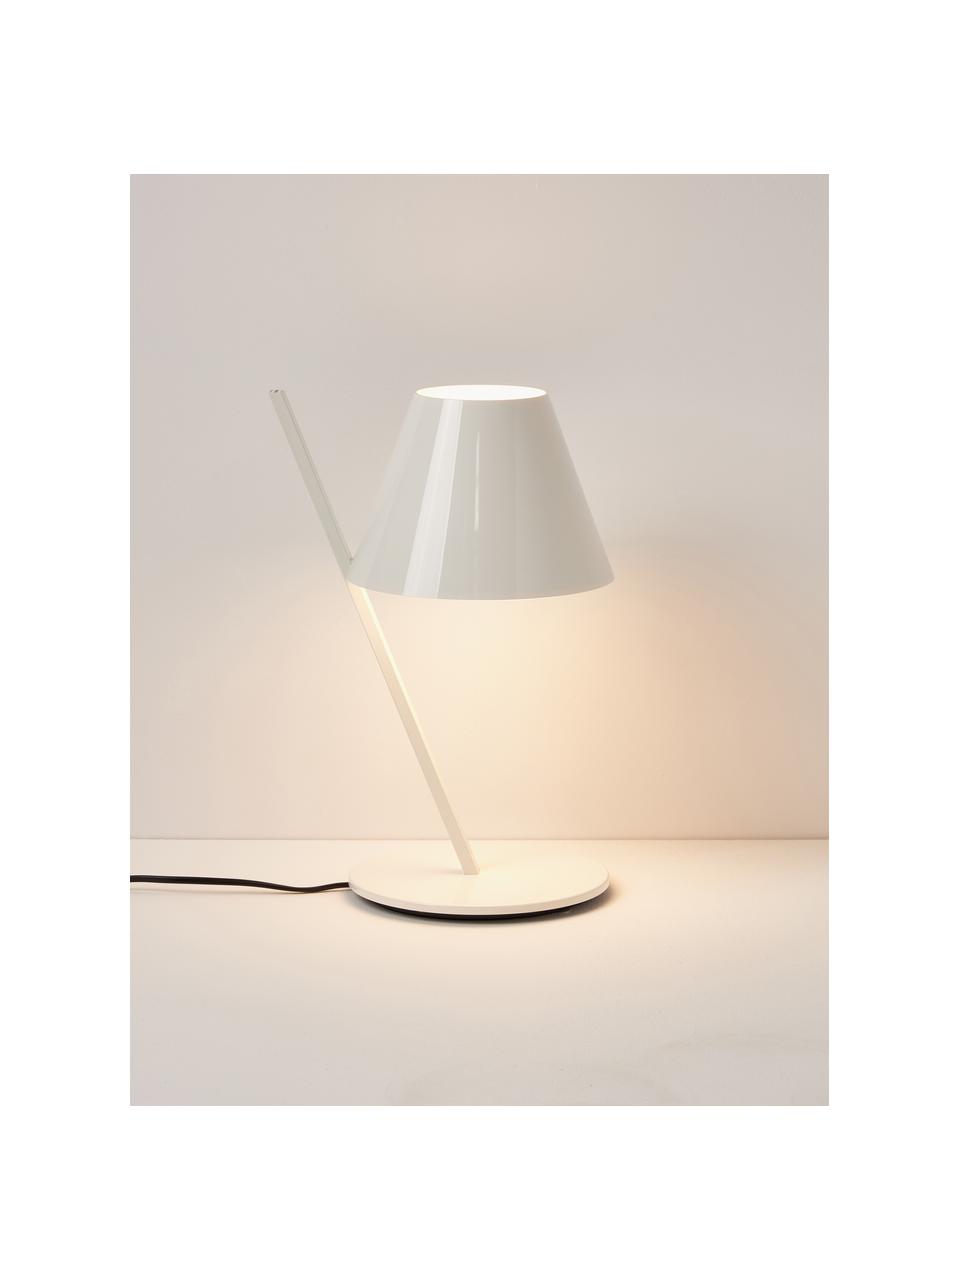 Tischlampe La Petite, Lampenschirm: Kunststoff, Gestell: Aluminium, beschichtet, Weiß, B 25 x H 37 cm